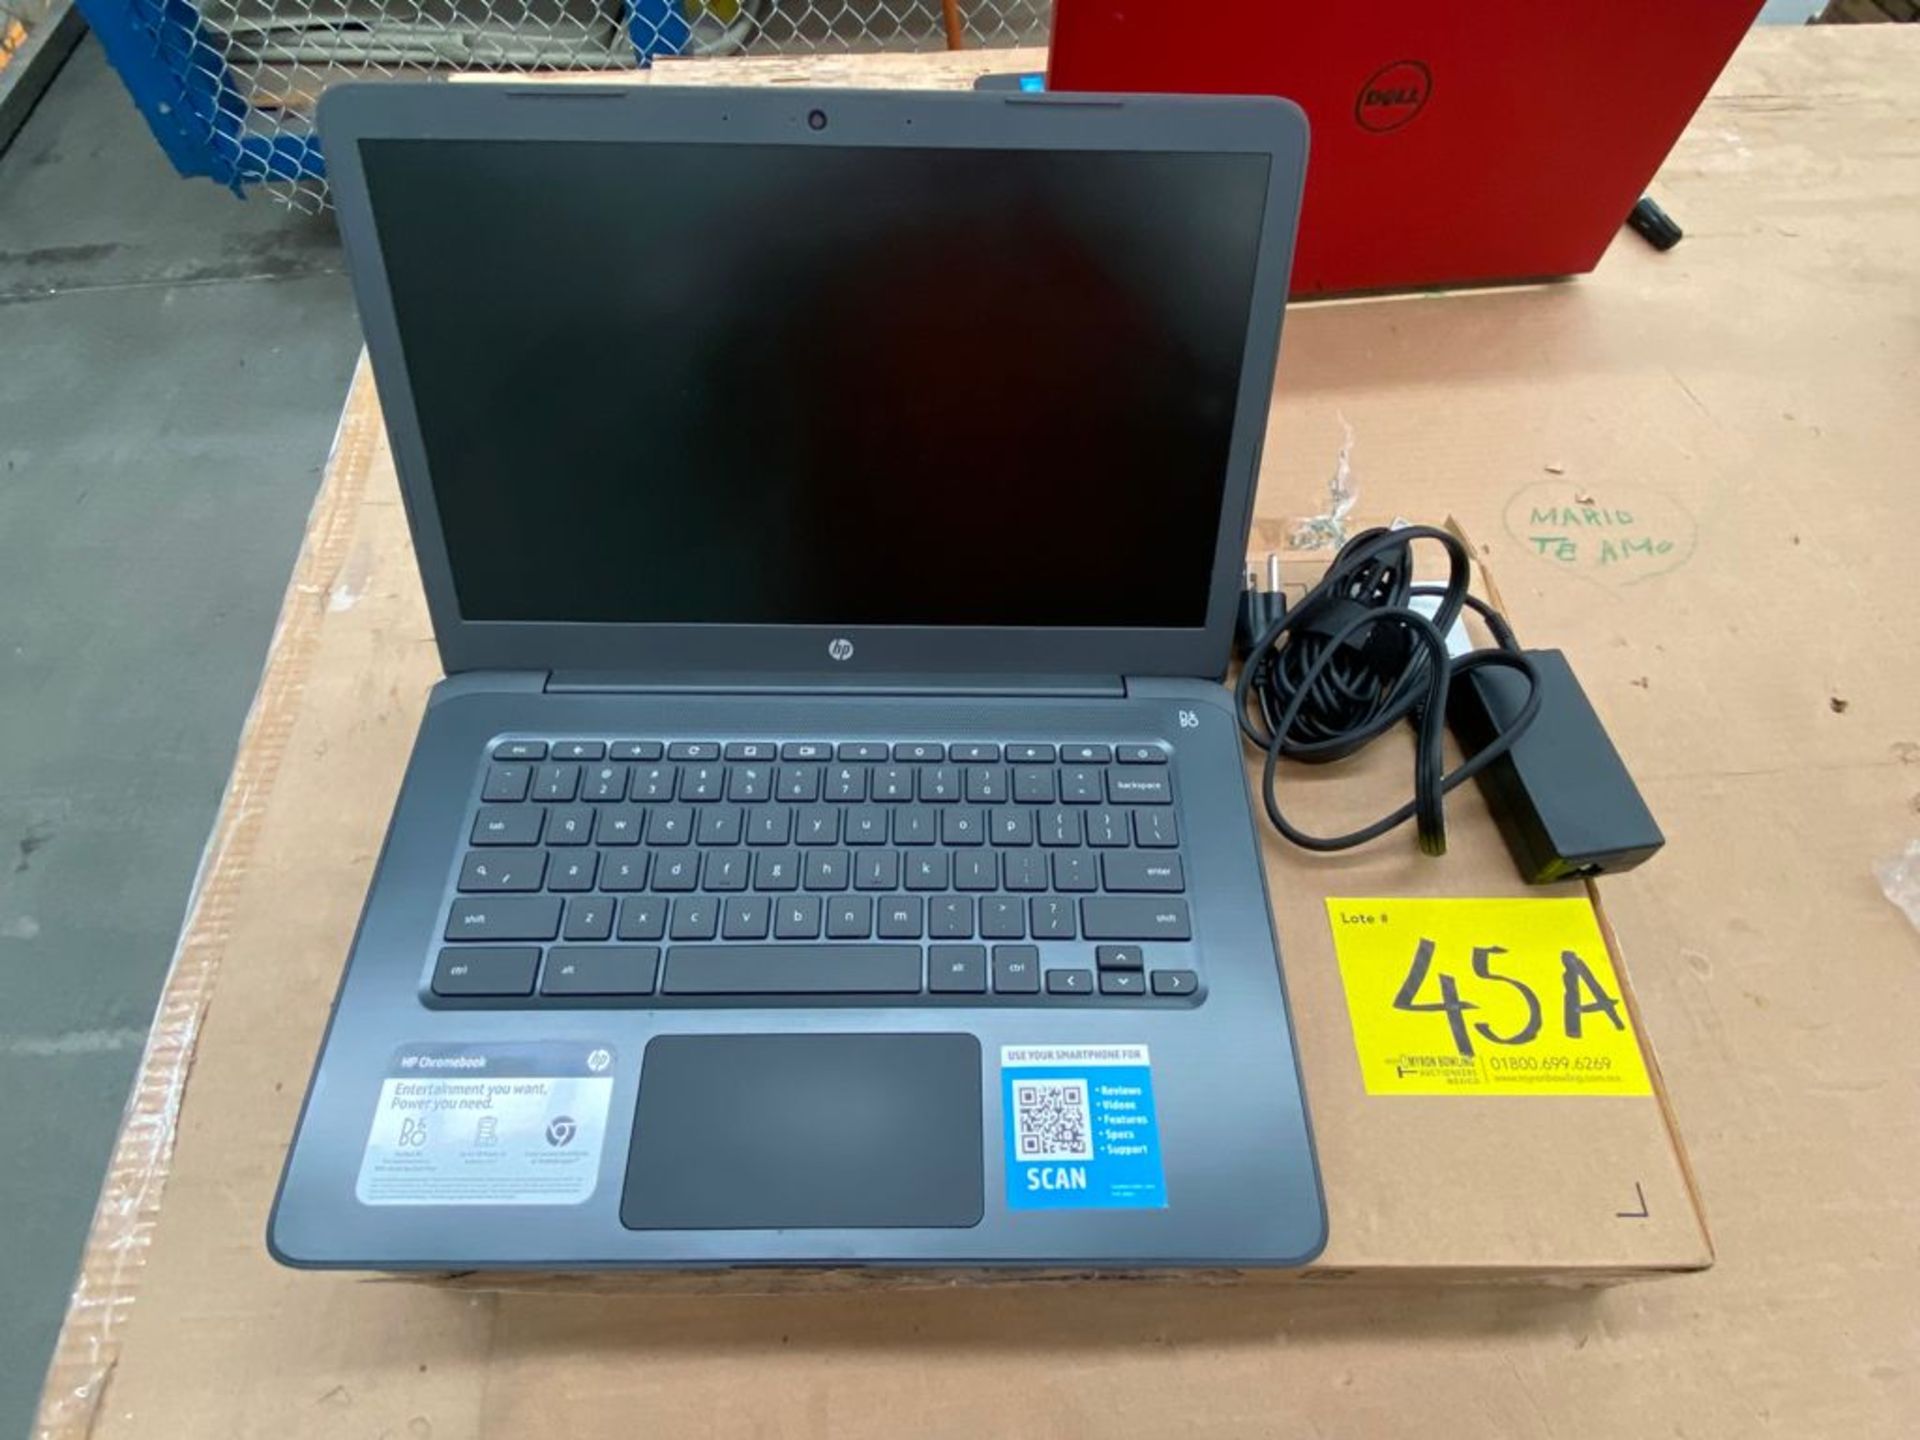 Laptop marca HP modelo Chromebook No de serie. 5CD94302R4 - Image 11 of 13